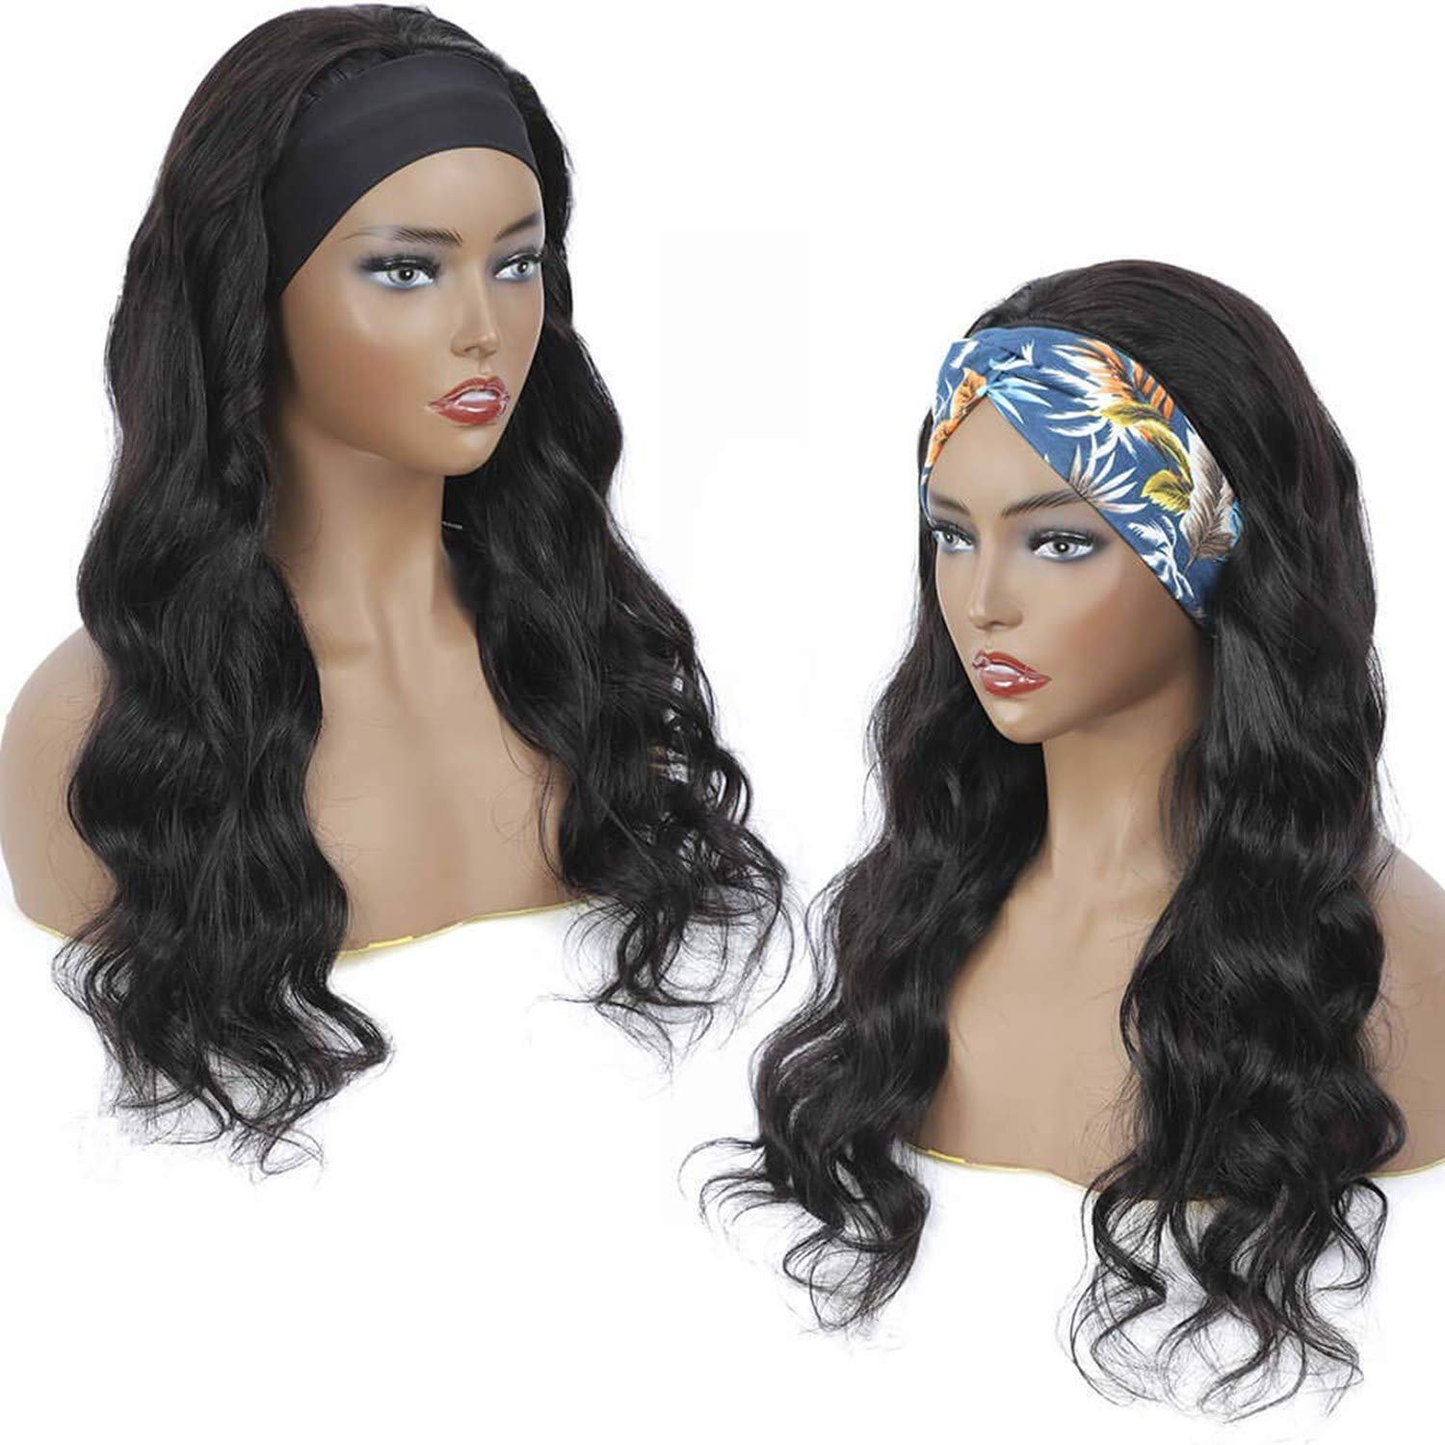 18 Inch Headband Wigs| Body Wave Human Hair Wig